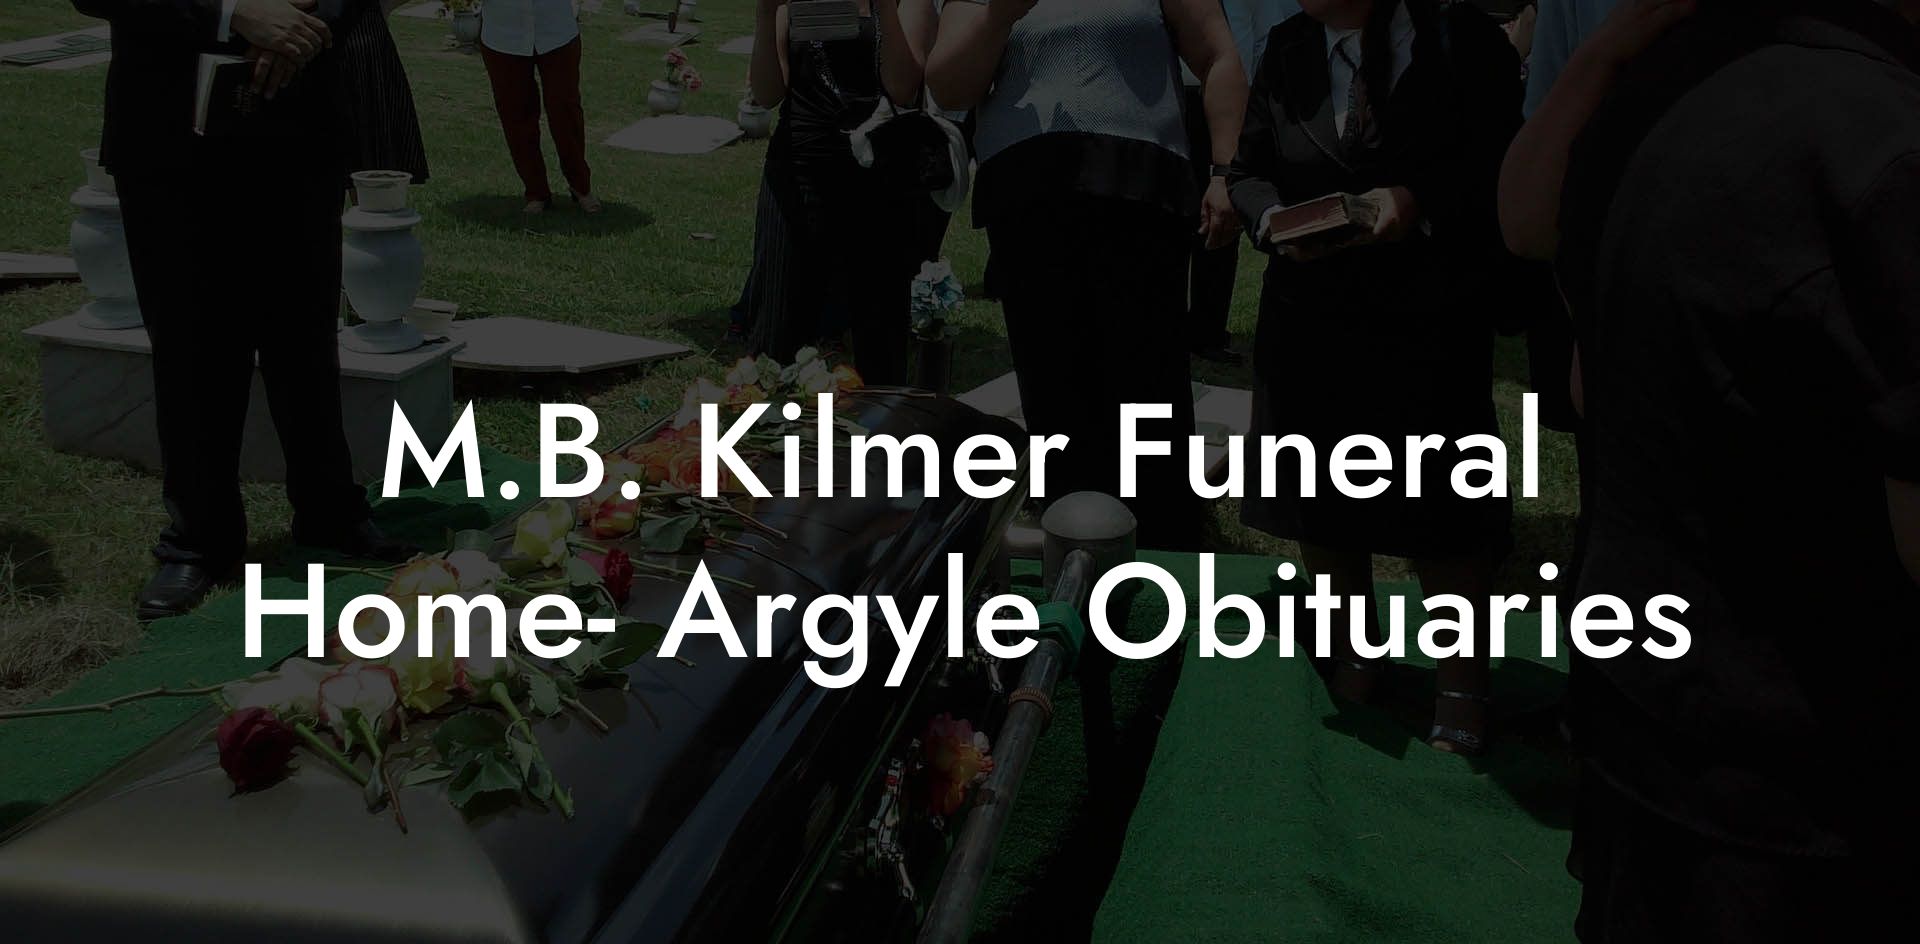 M.B. Kilmer Funeral Home- Argyle Obituaries